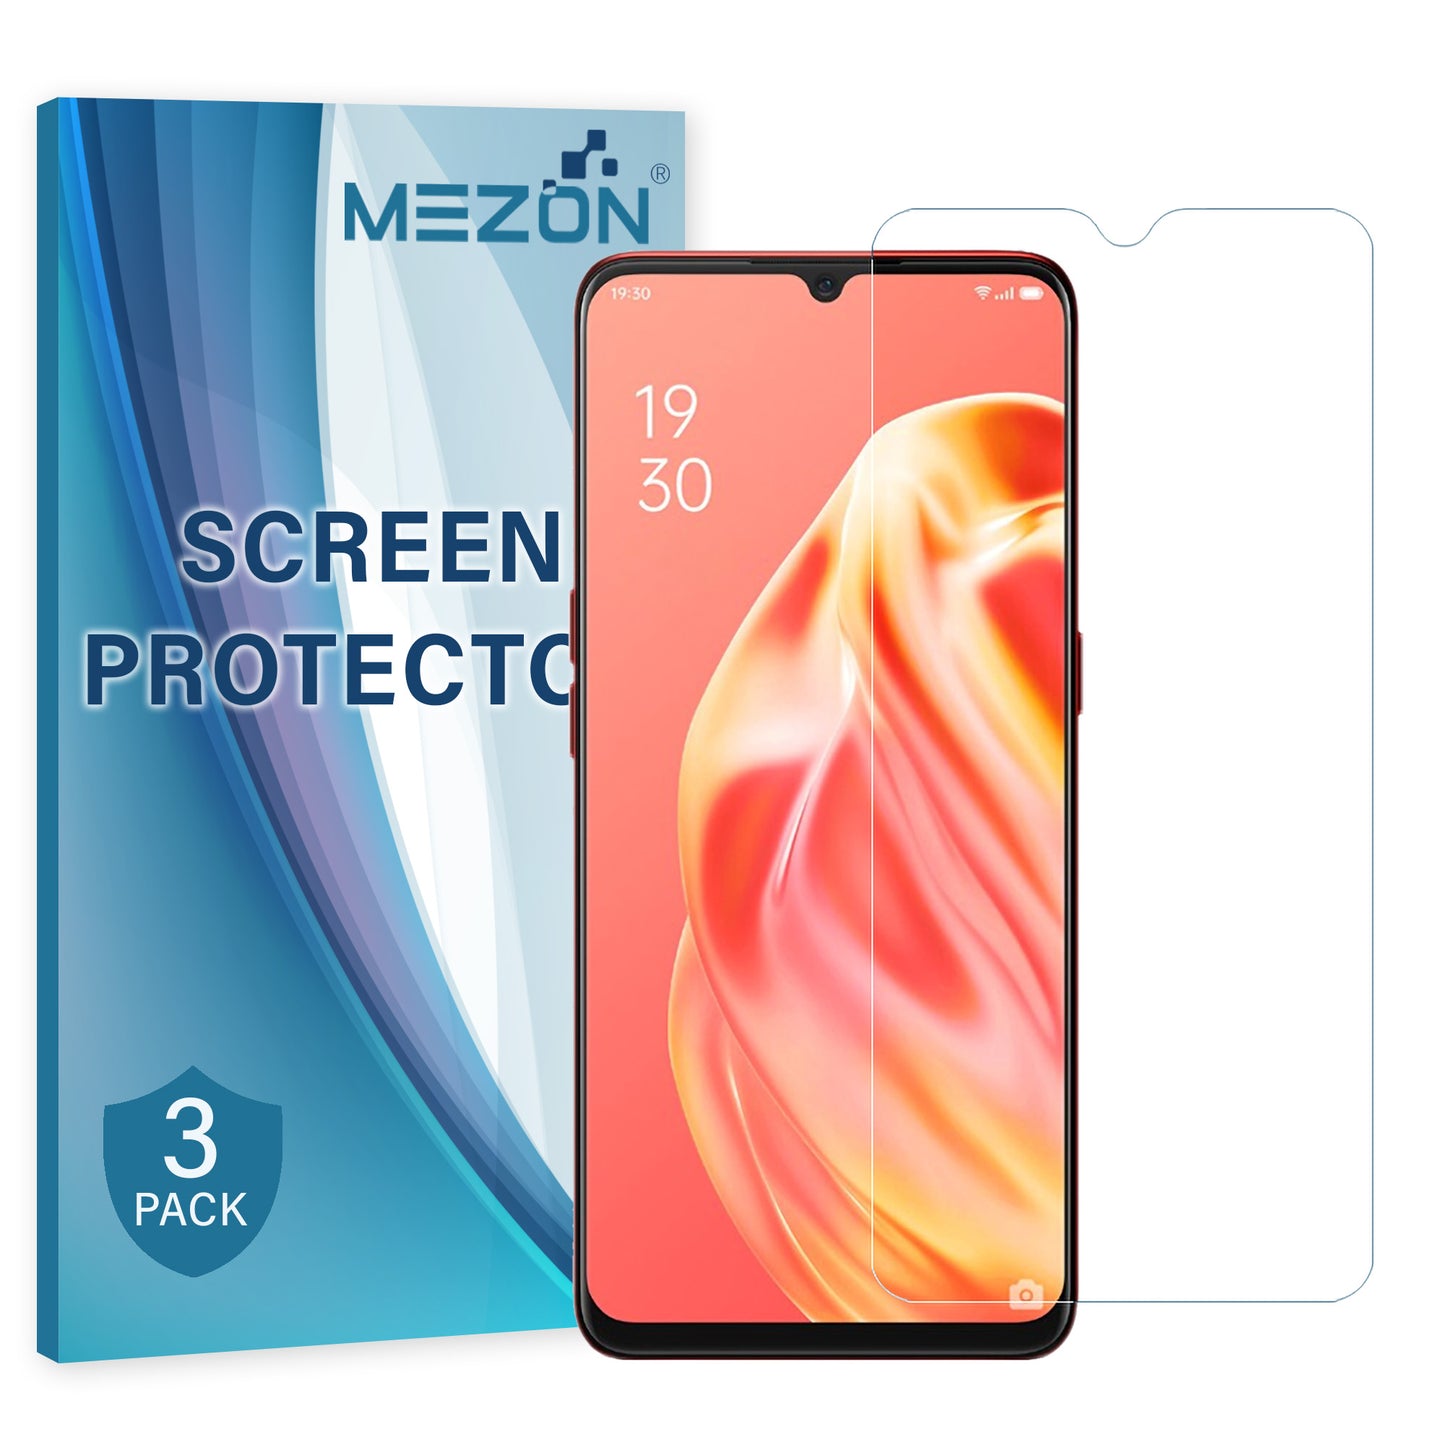 [3 Pack] MEZON Vivo Y21 Anti-Glare Matte Screen Protector Case Friendly Film (Vivo Y21, Matte)